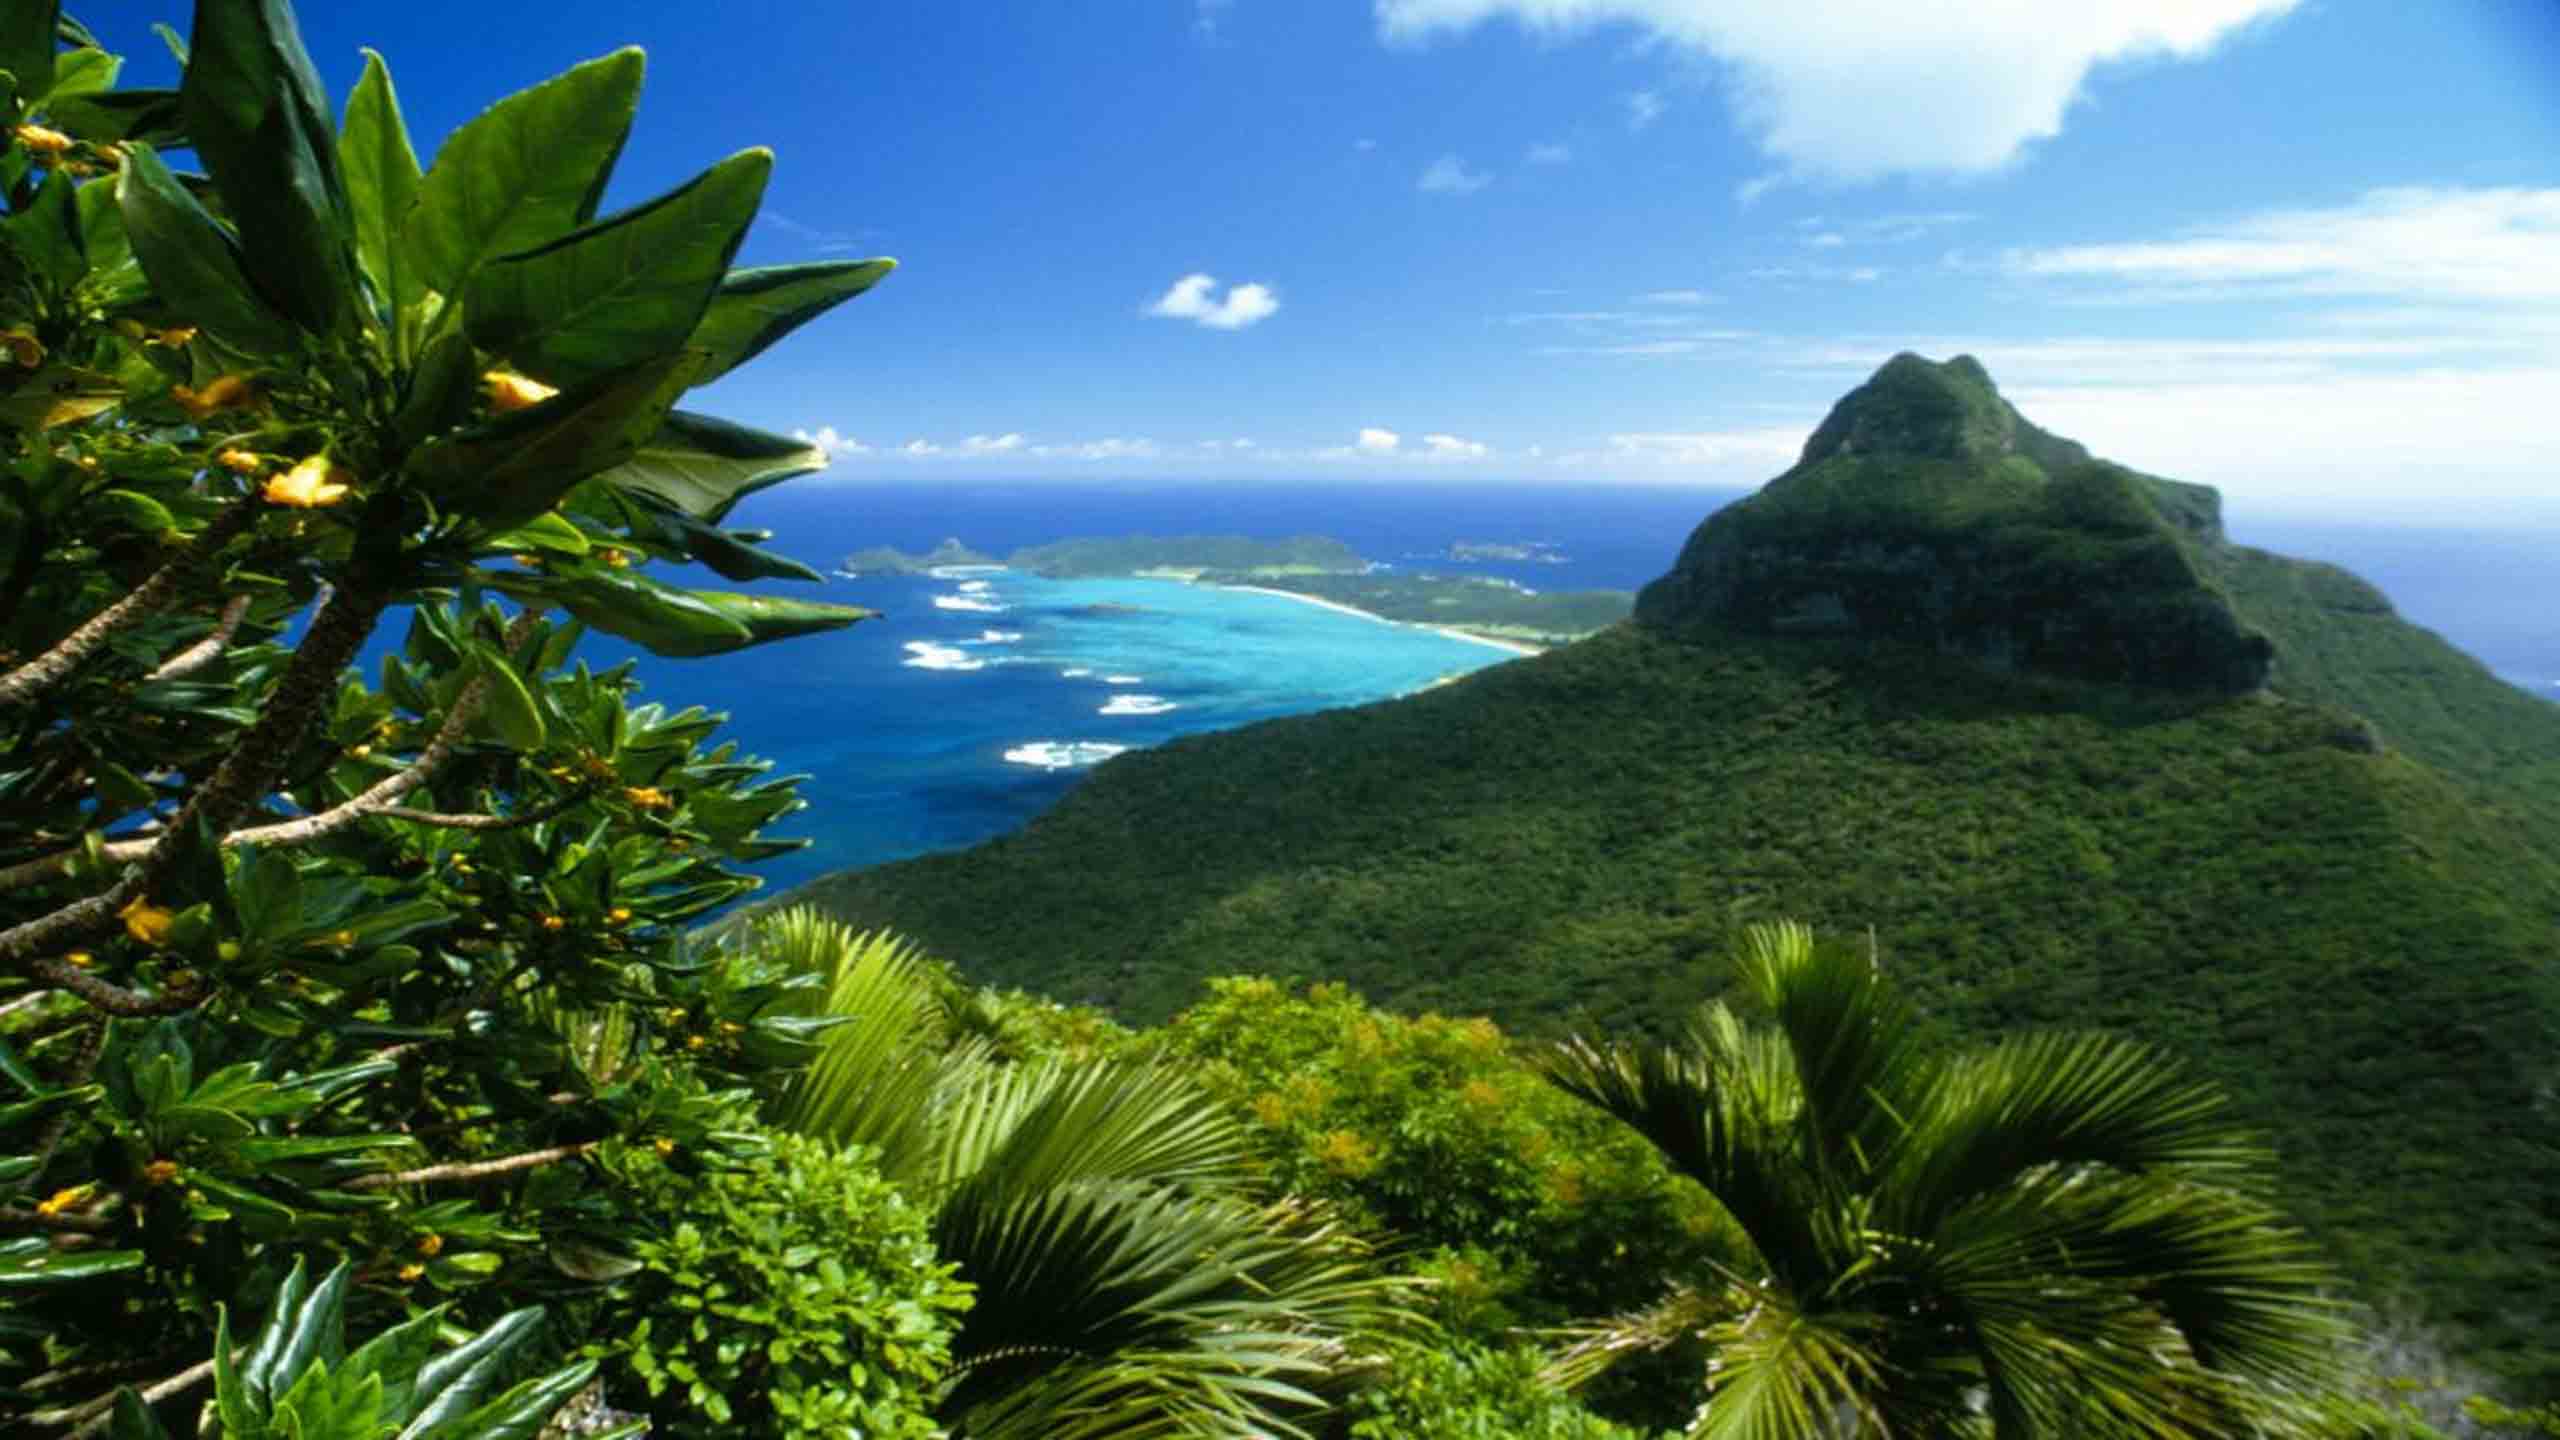 arajilla-lord-howe-island-stunning-tropical-forest